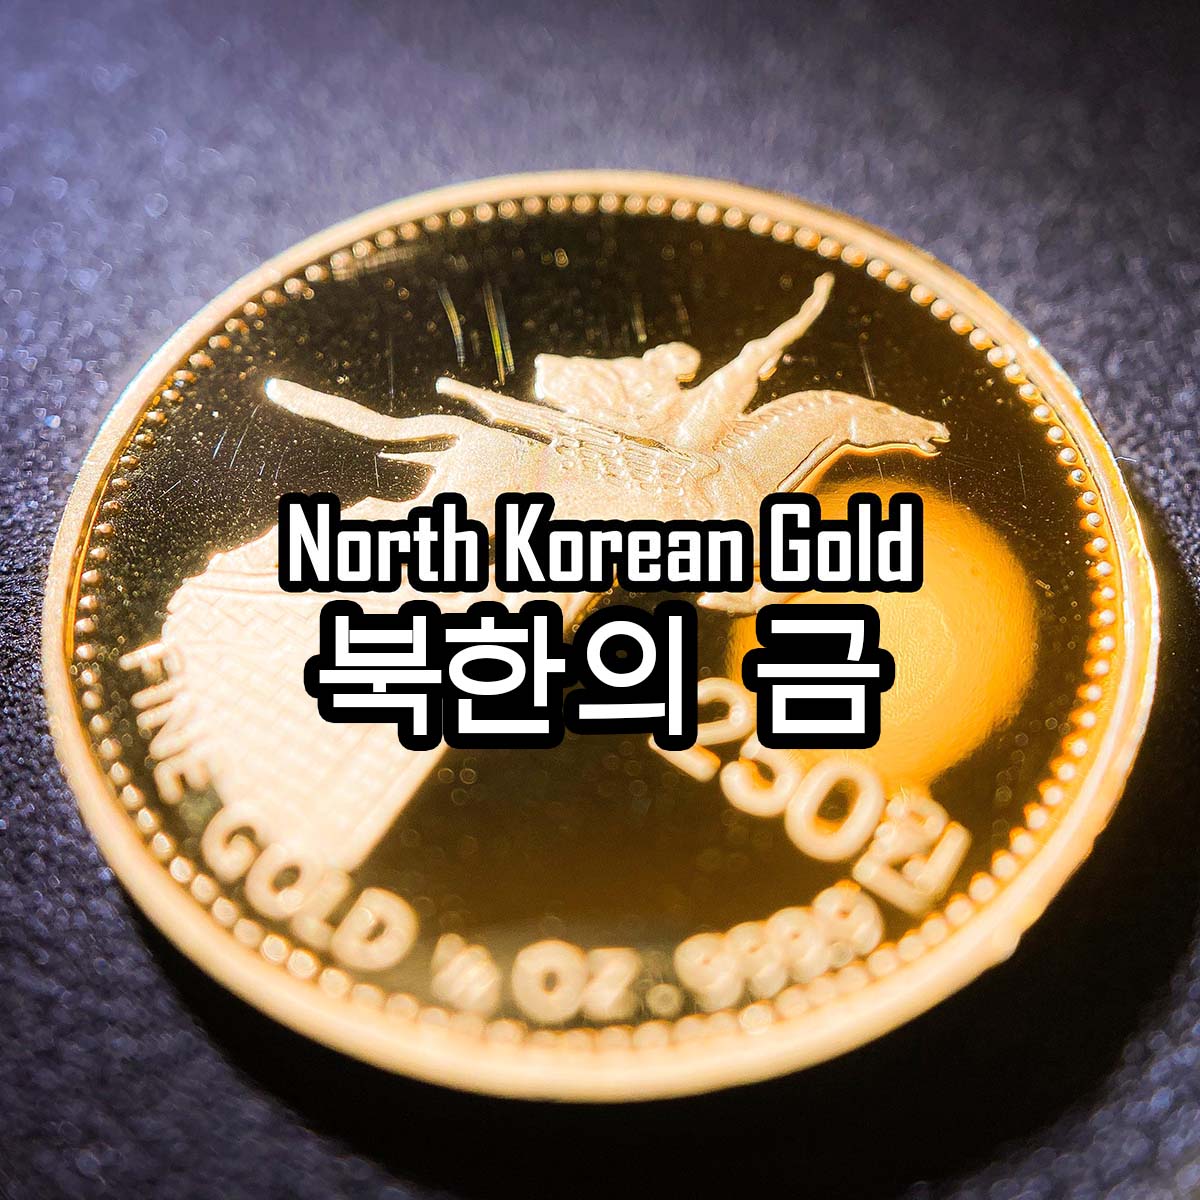 North Korean Gold